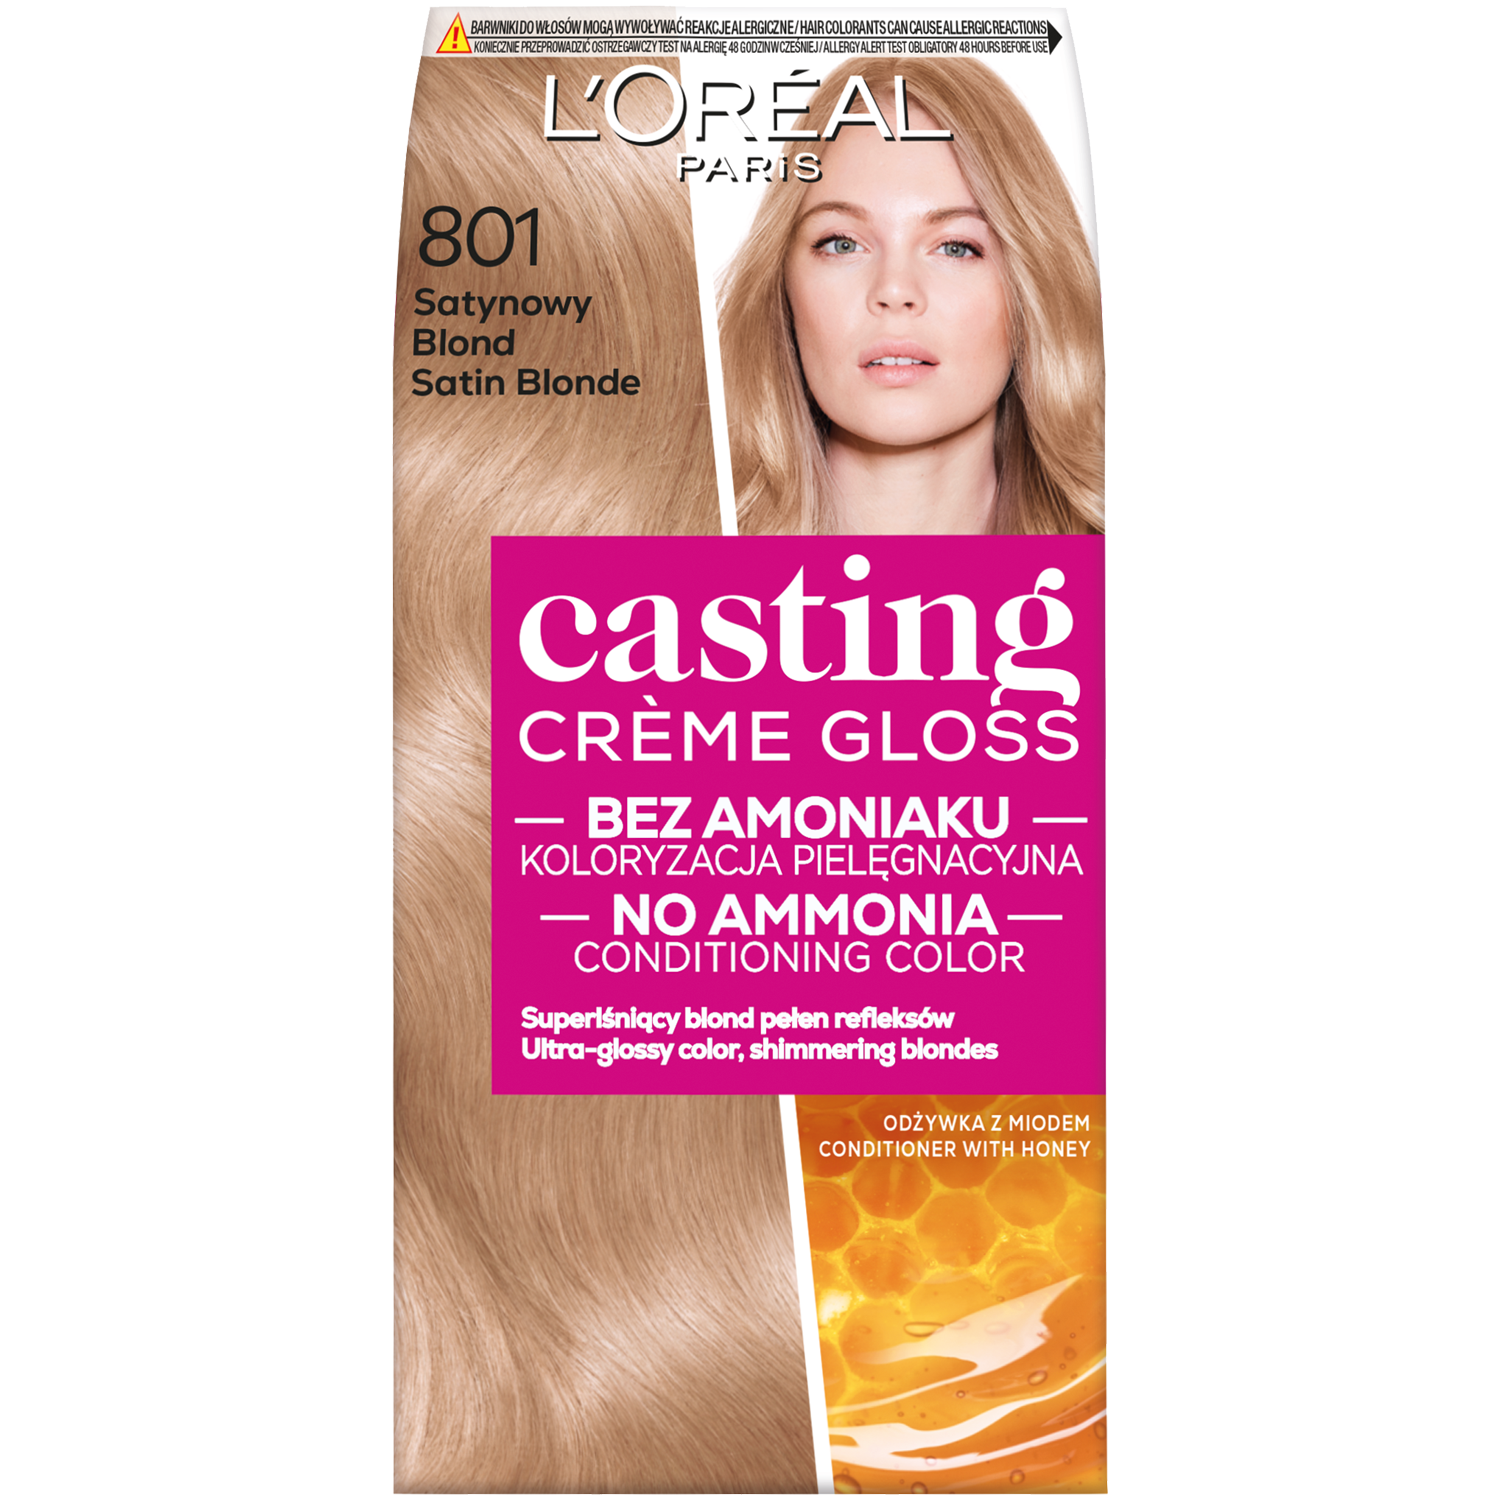 L'Oréal Paris Casting Crème Gloss farba do włosów 801 satynowy blond, 1  opak. | hebe.pl